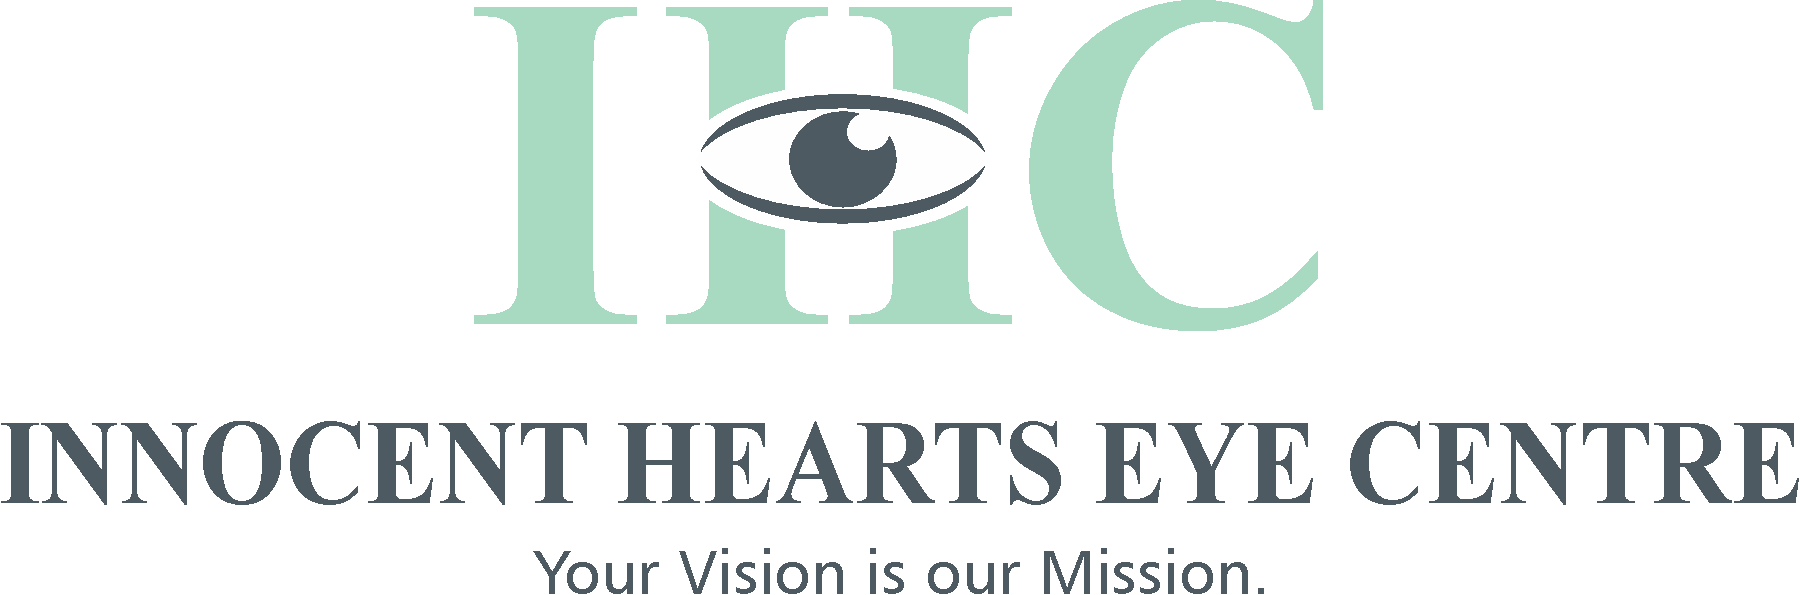 Innocent Hearts Eye Centre|Hospitals|Medical Services